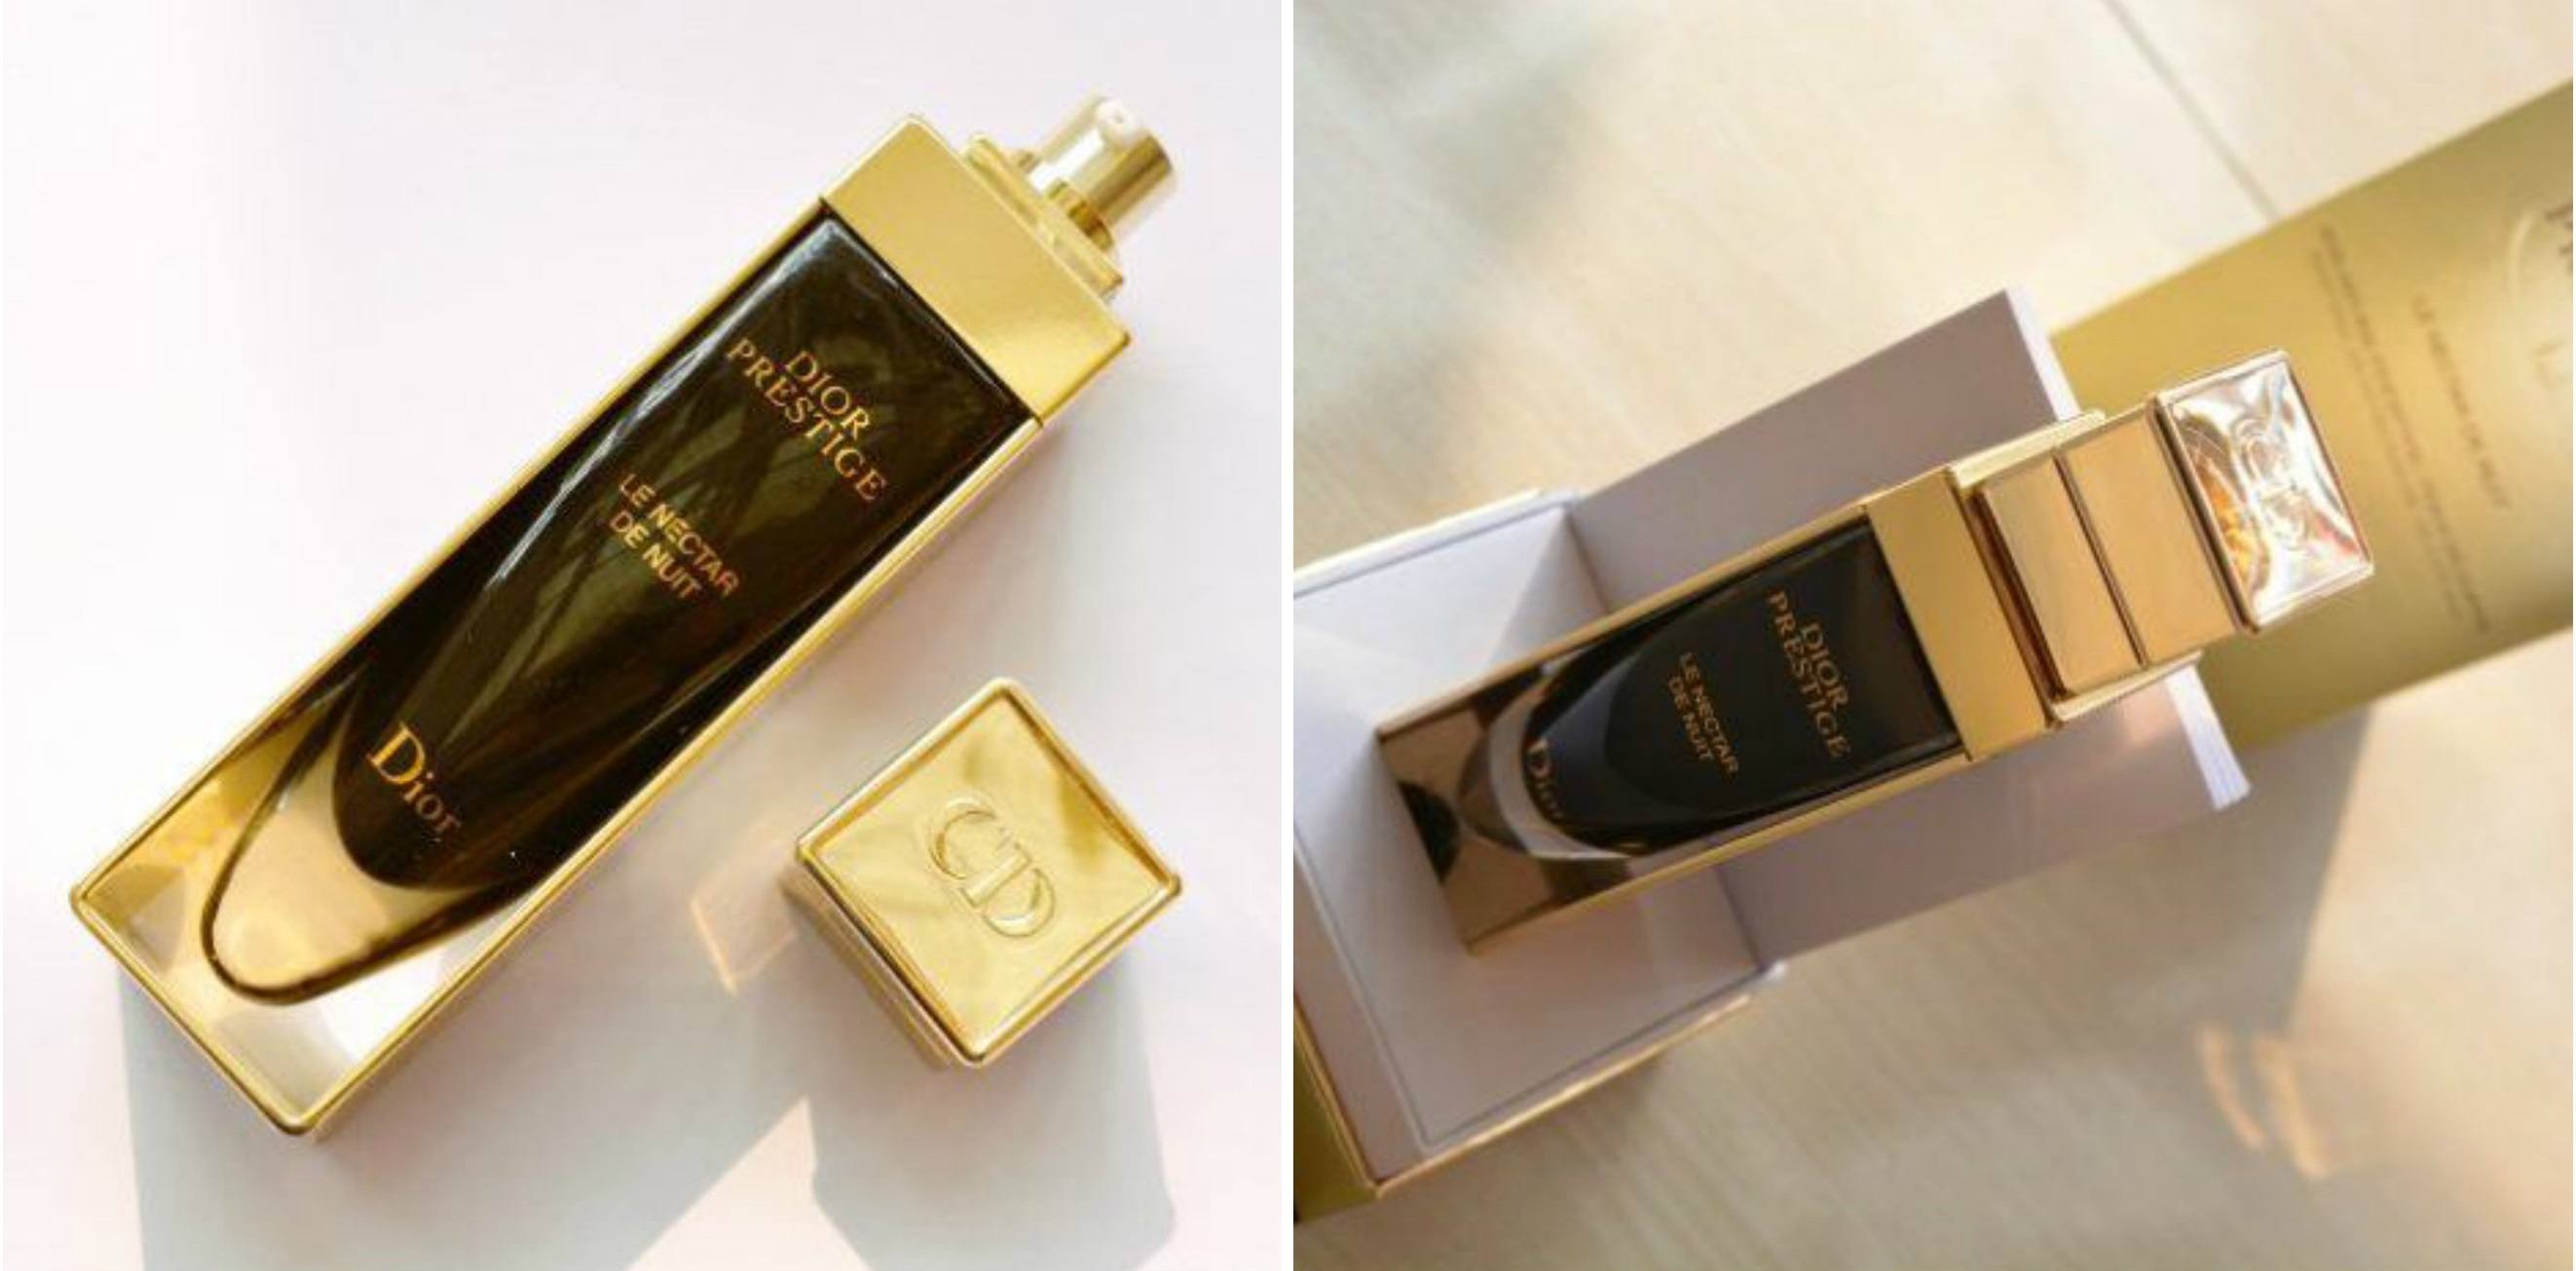 Christian Dior Prestige Le Nectar De Nuit buy to Korea Republic of  South CosmoStore Korea Republic of South